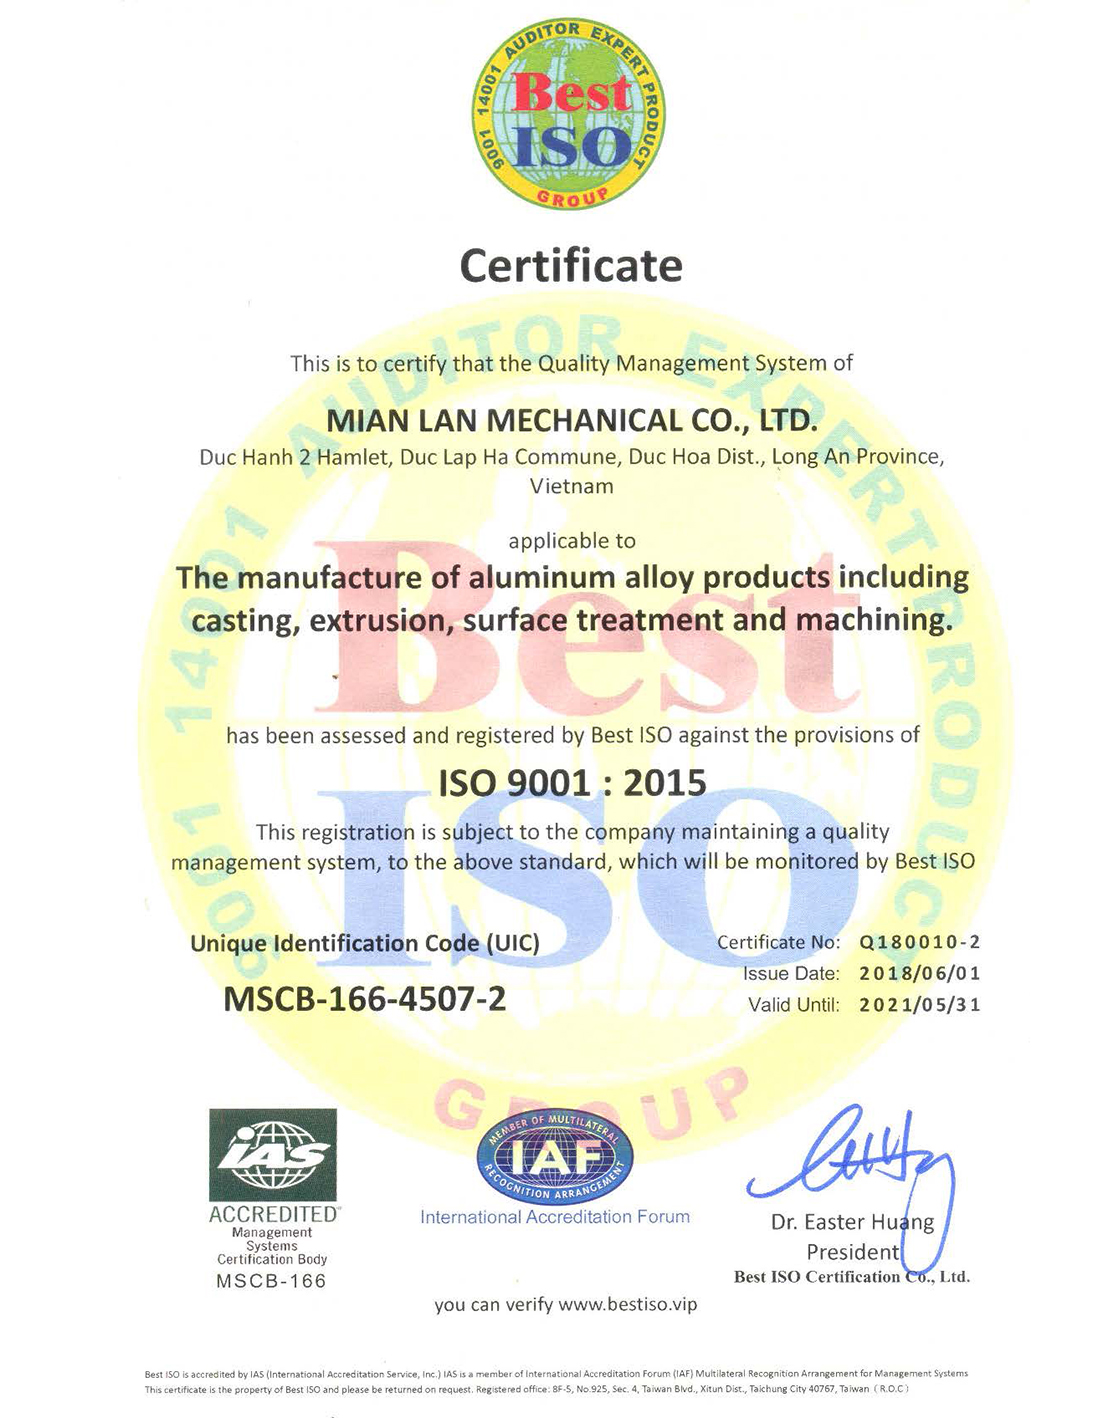 ISO 9001:2015 MianLan